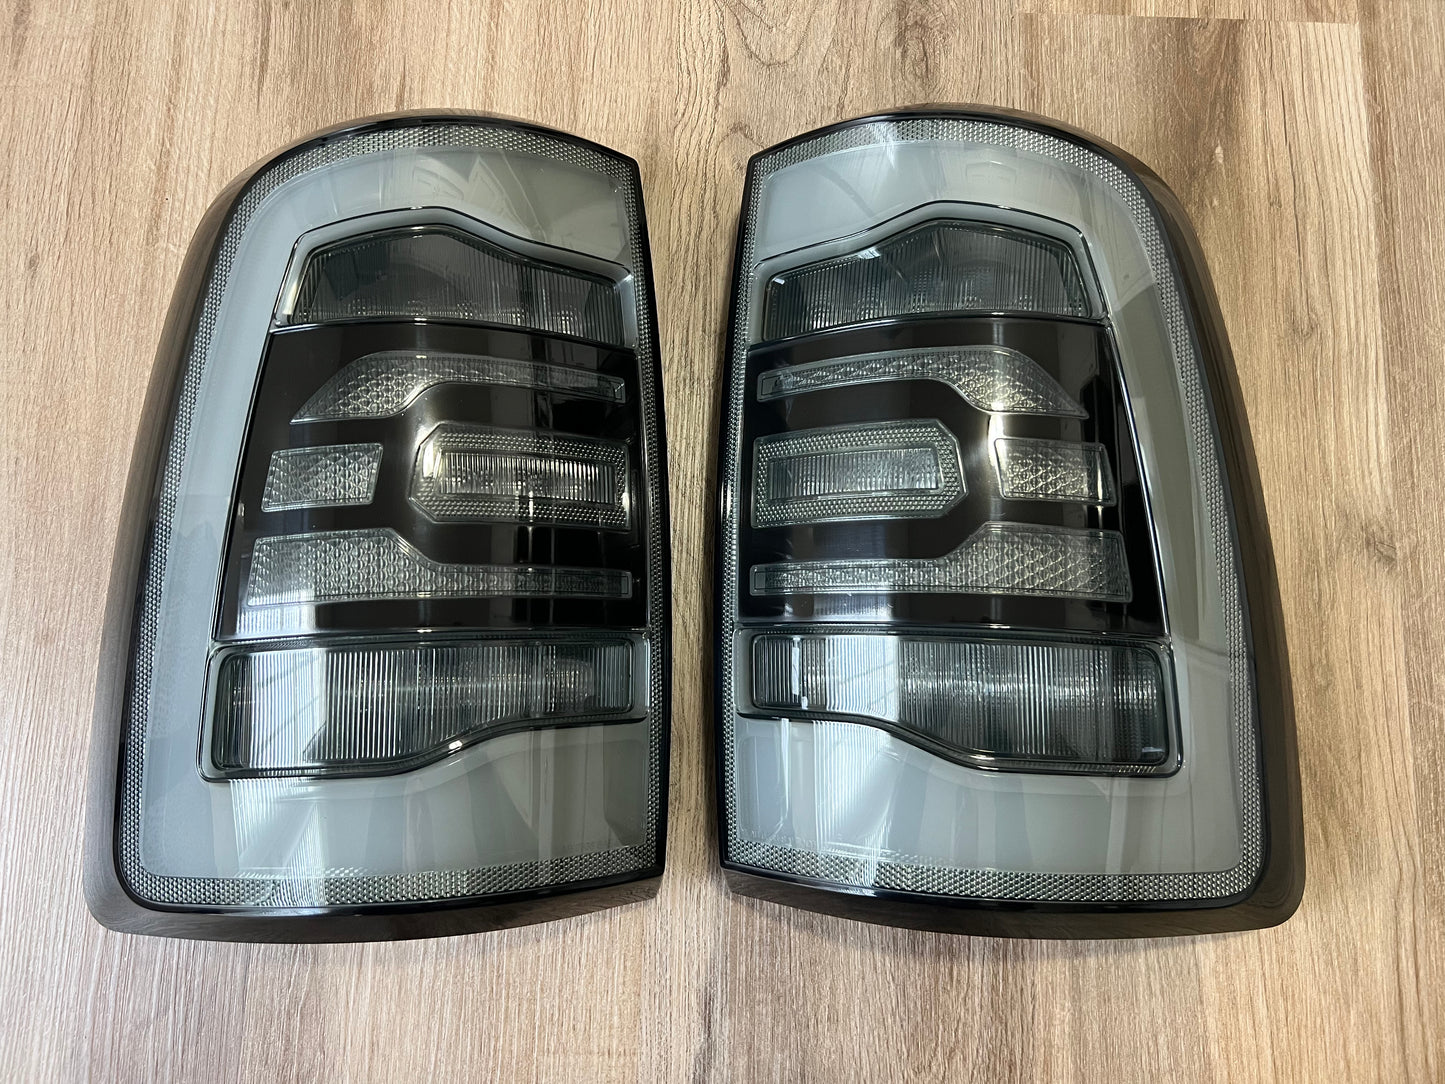 DODGE RAM (2009-2018): GTR CARBIDE LED TAIL LIGHTS 5th gen style